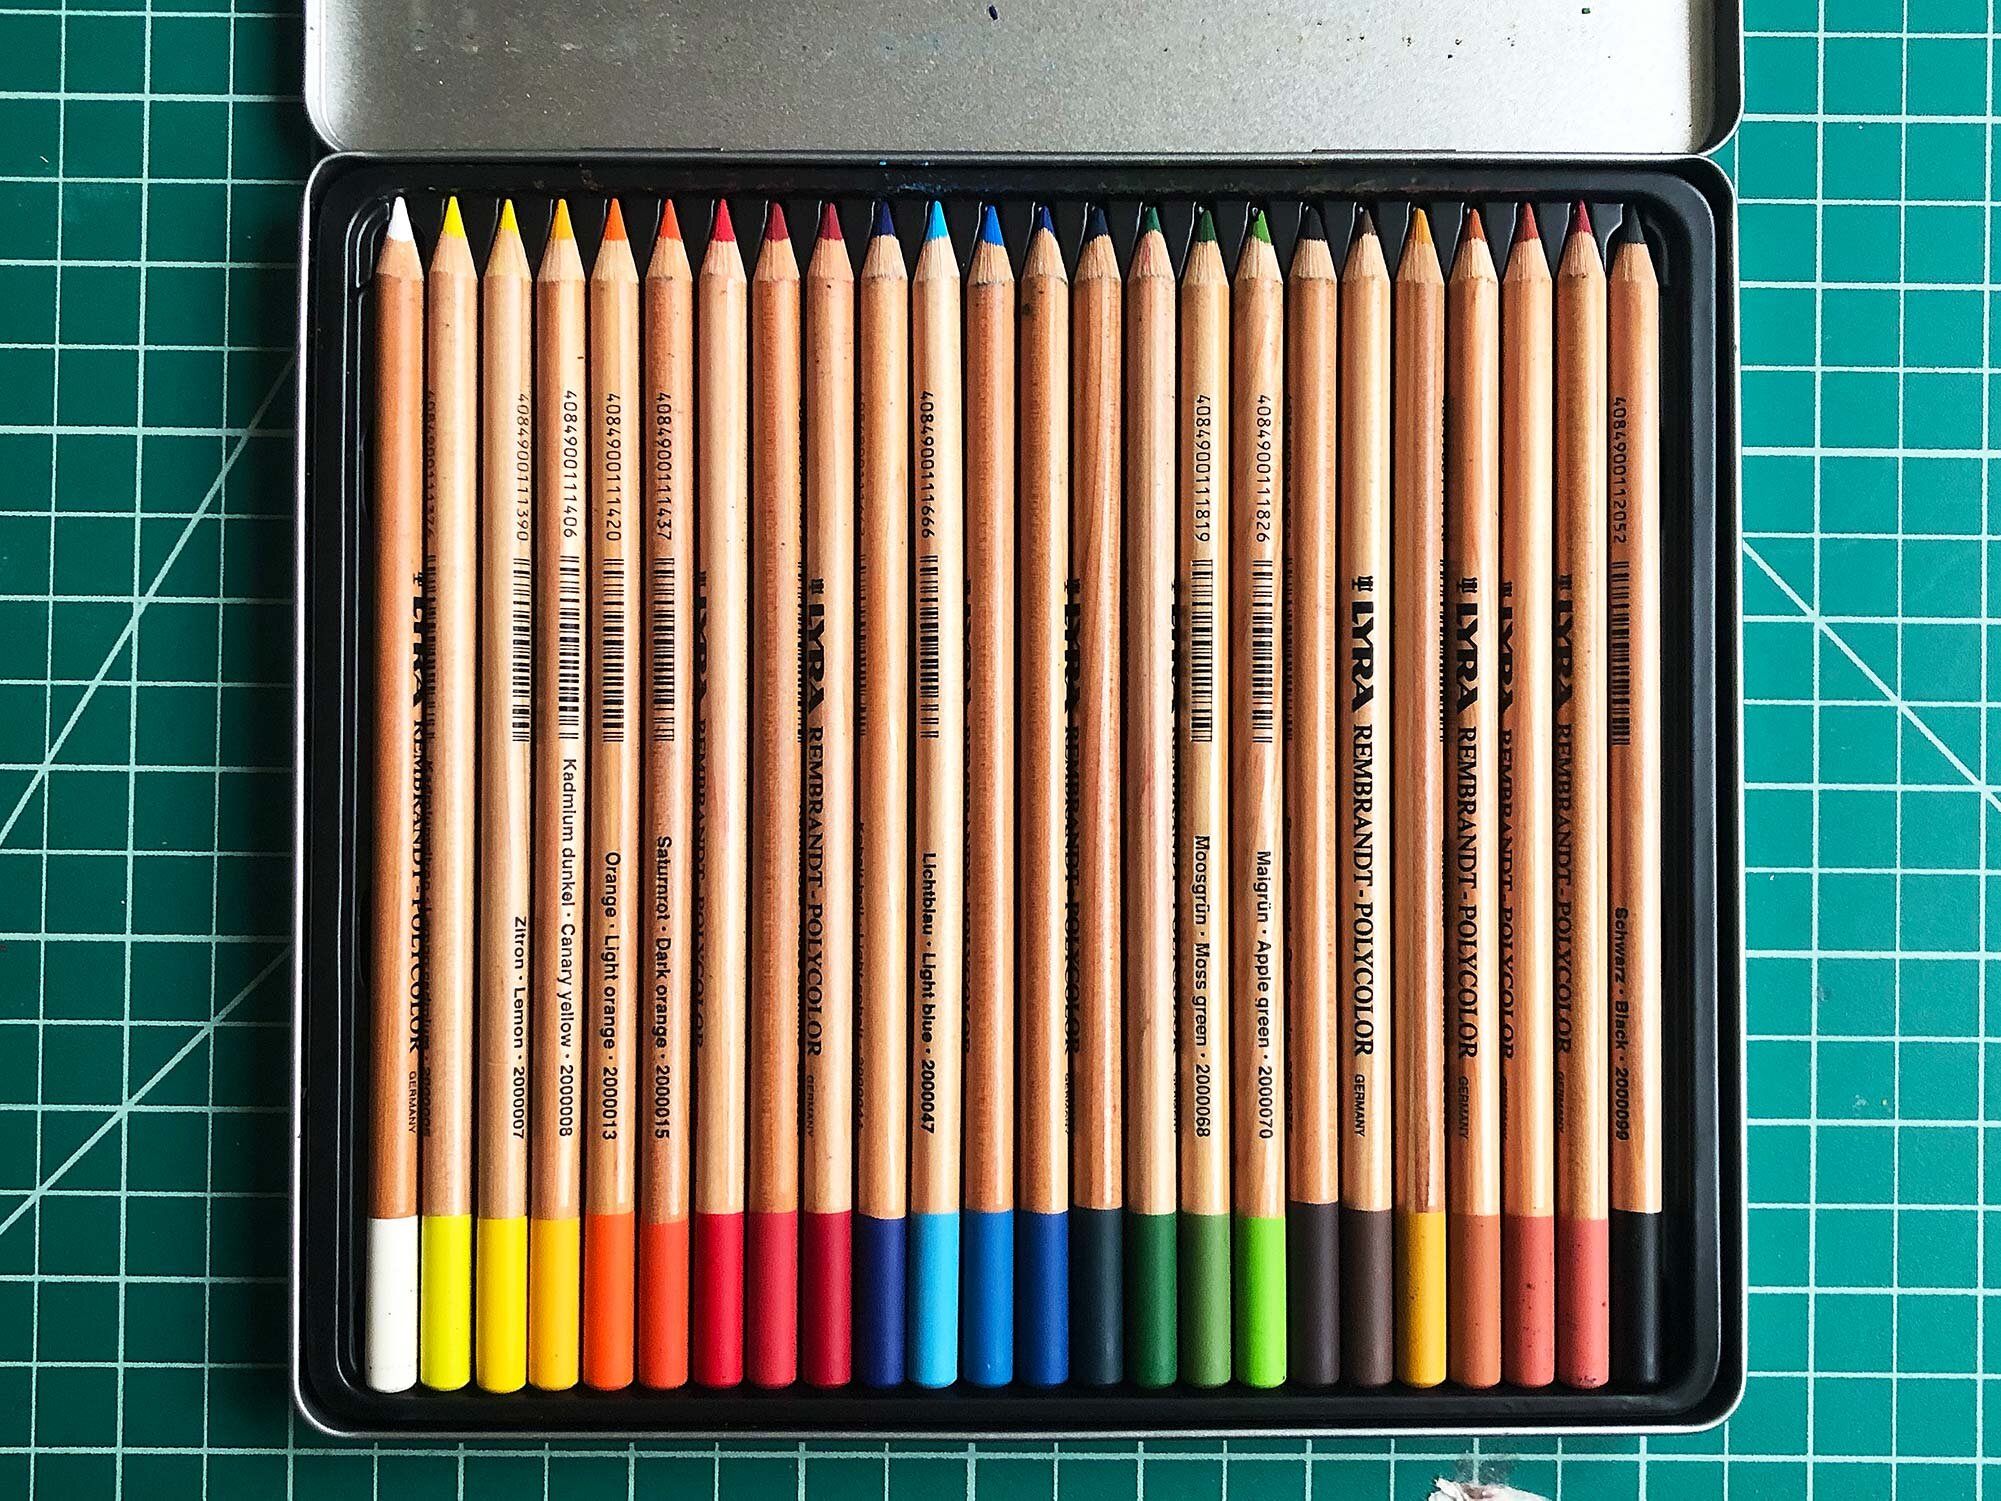 Lyra Rembrandt Polycolor Premium Oil-Based Colored Pencil Set - Set of 36